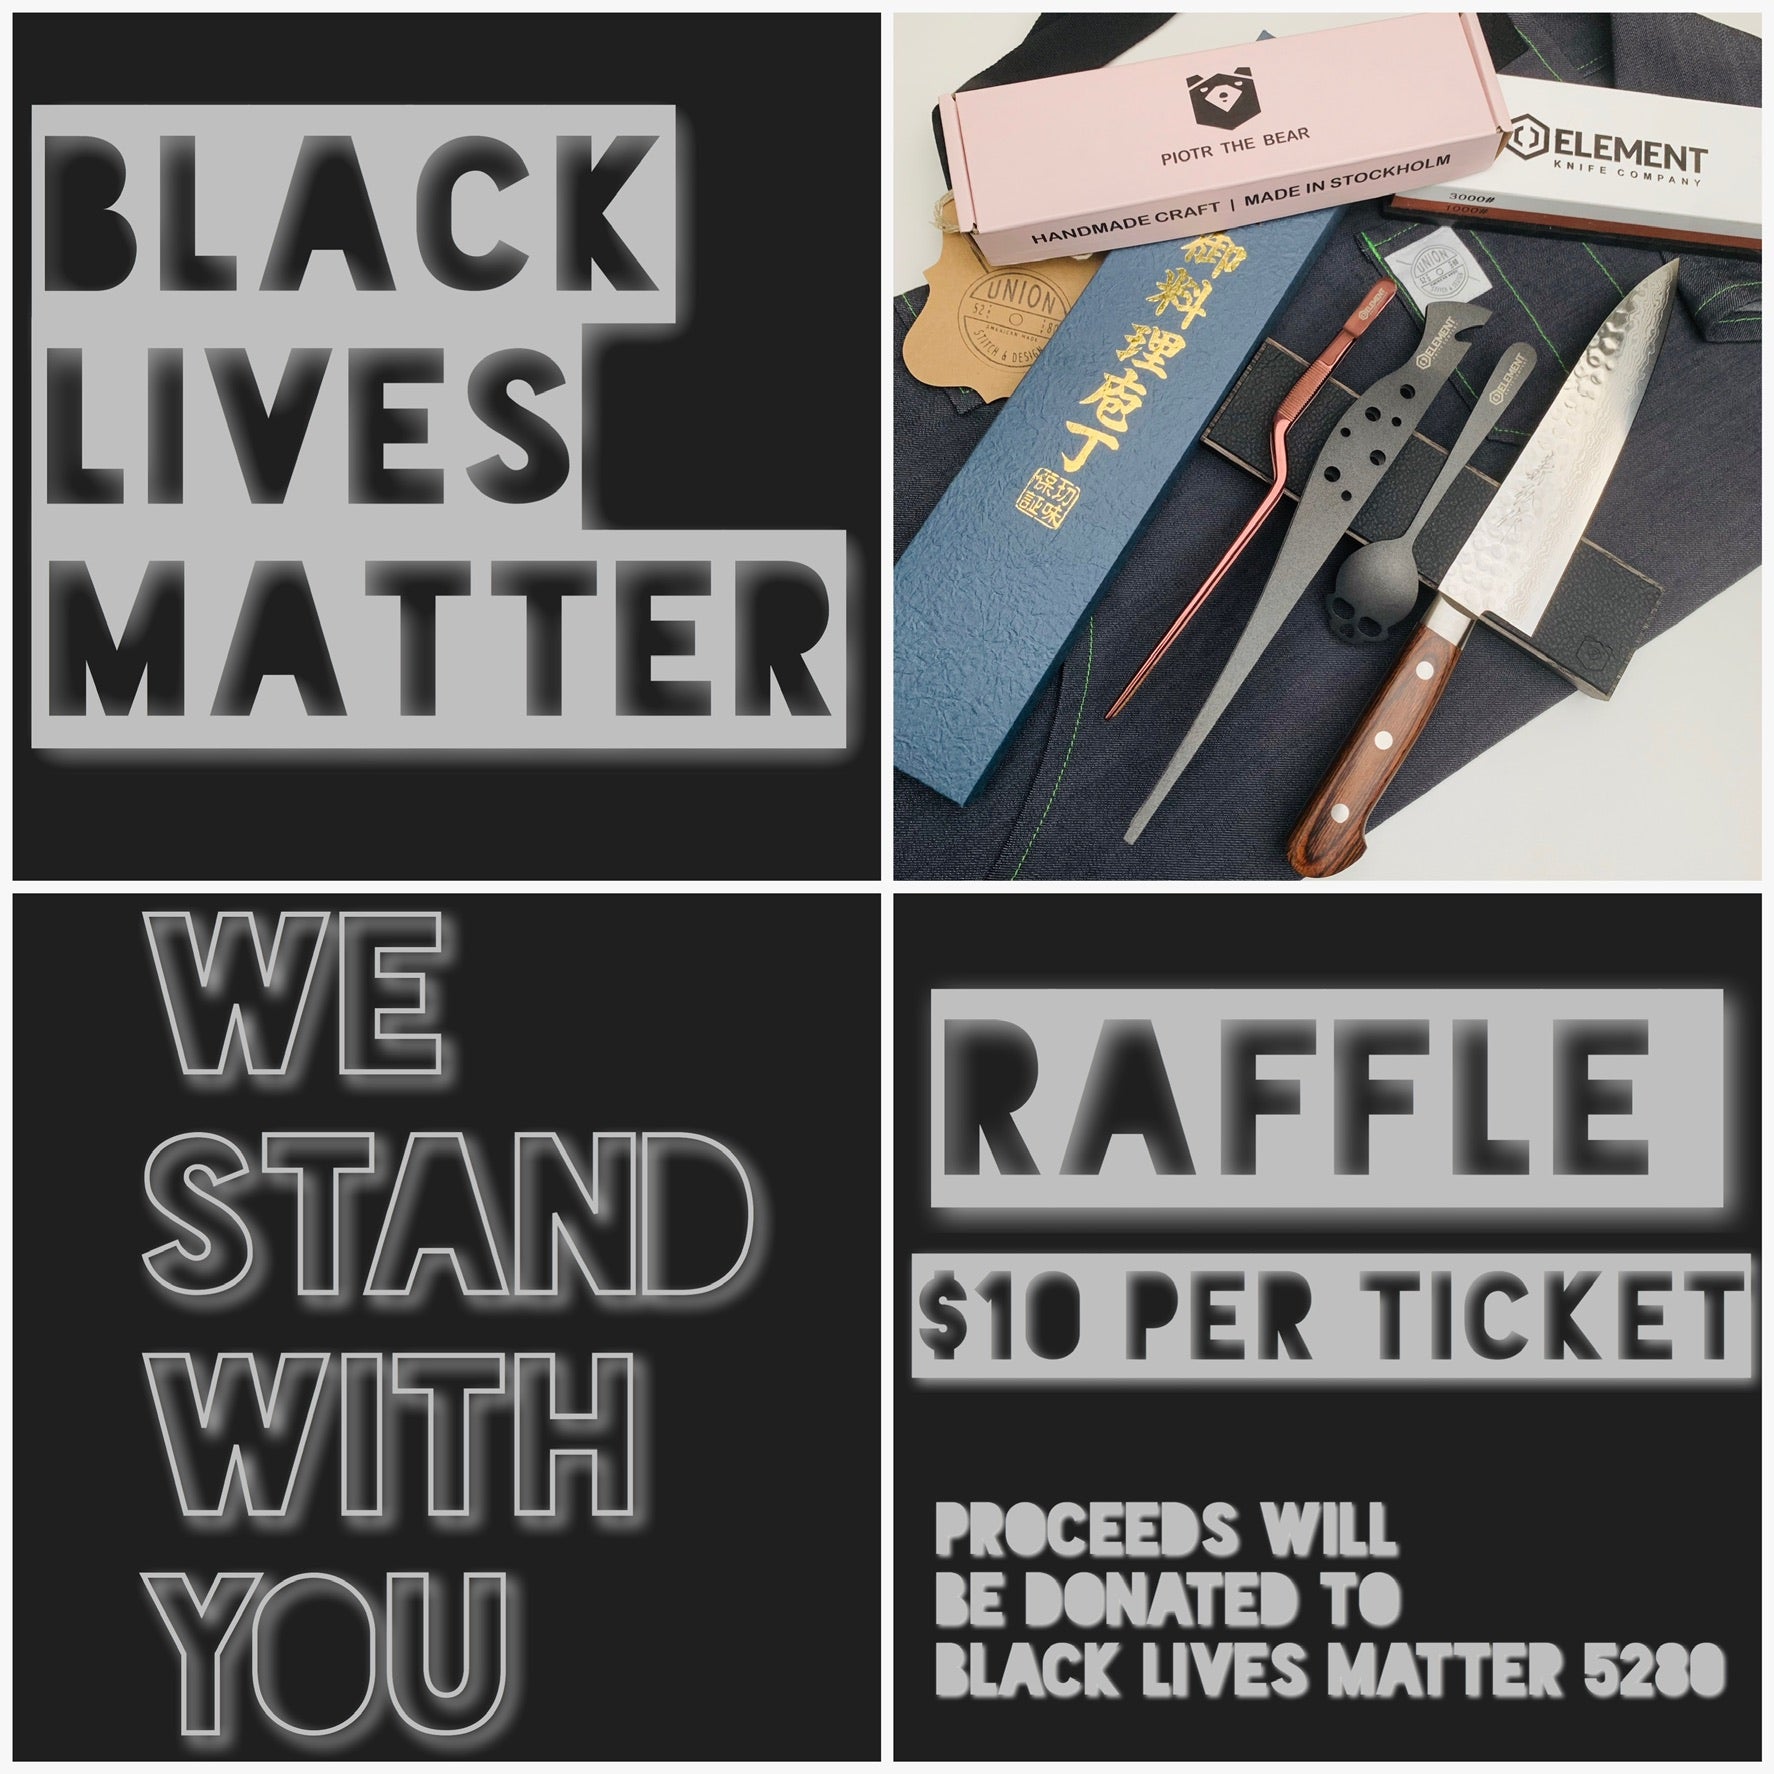 Black Lives Matter, Raffle to raise funds.